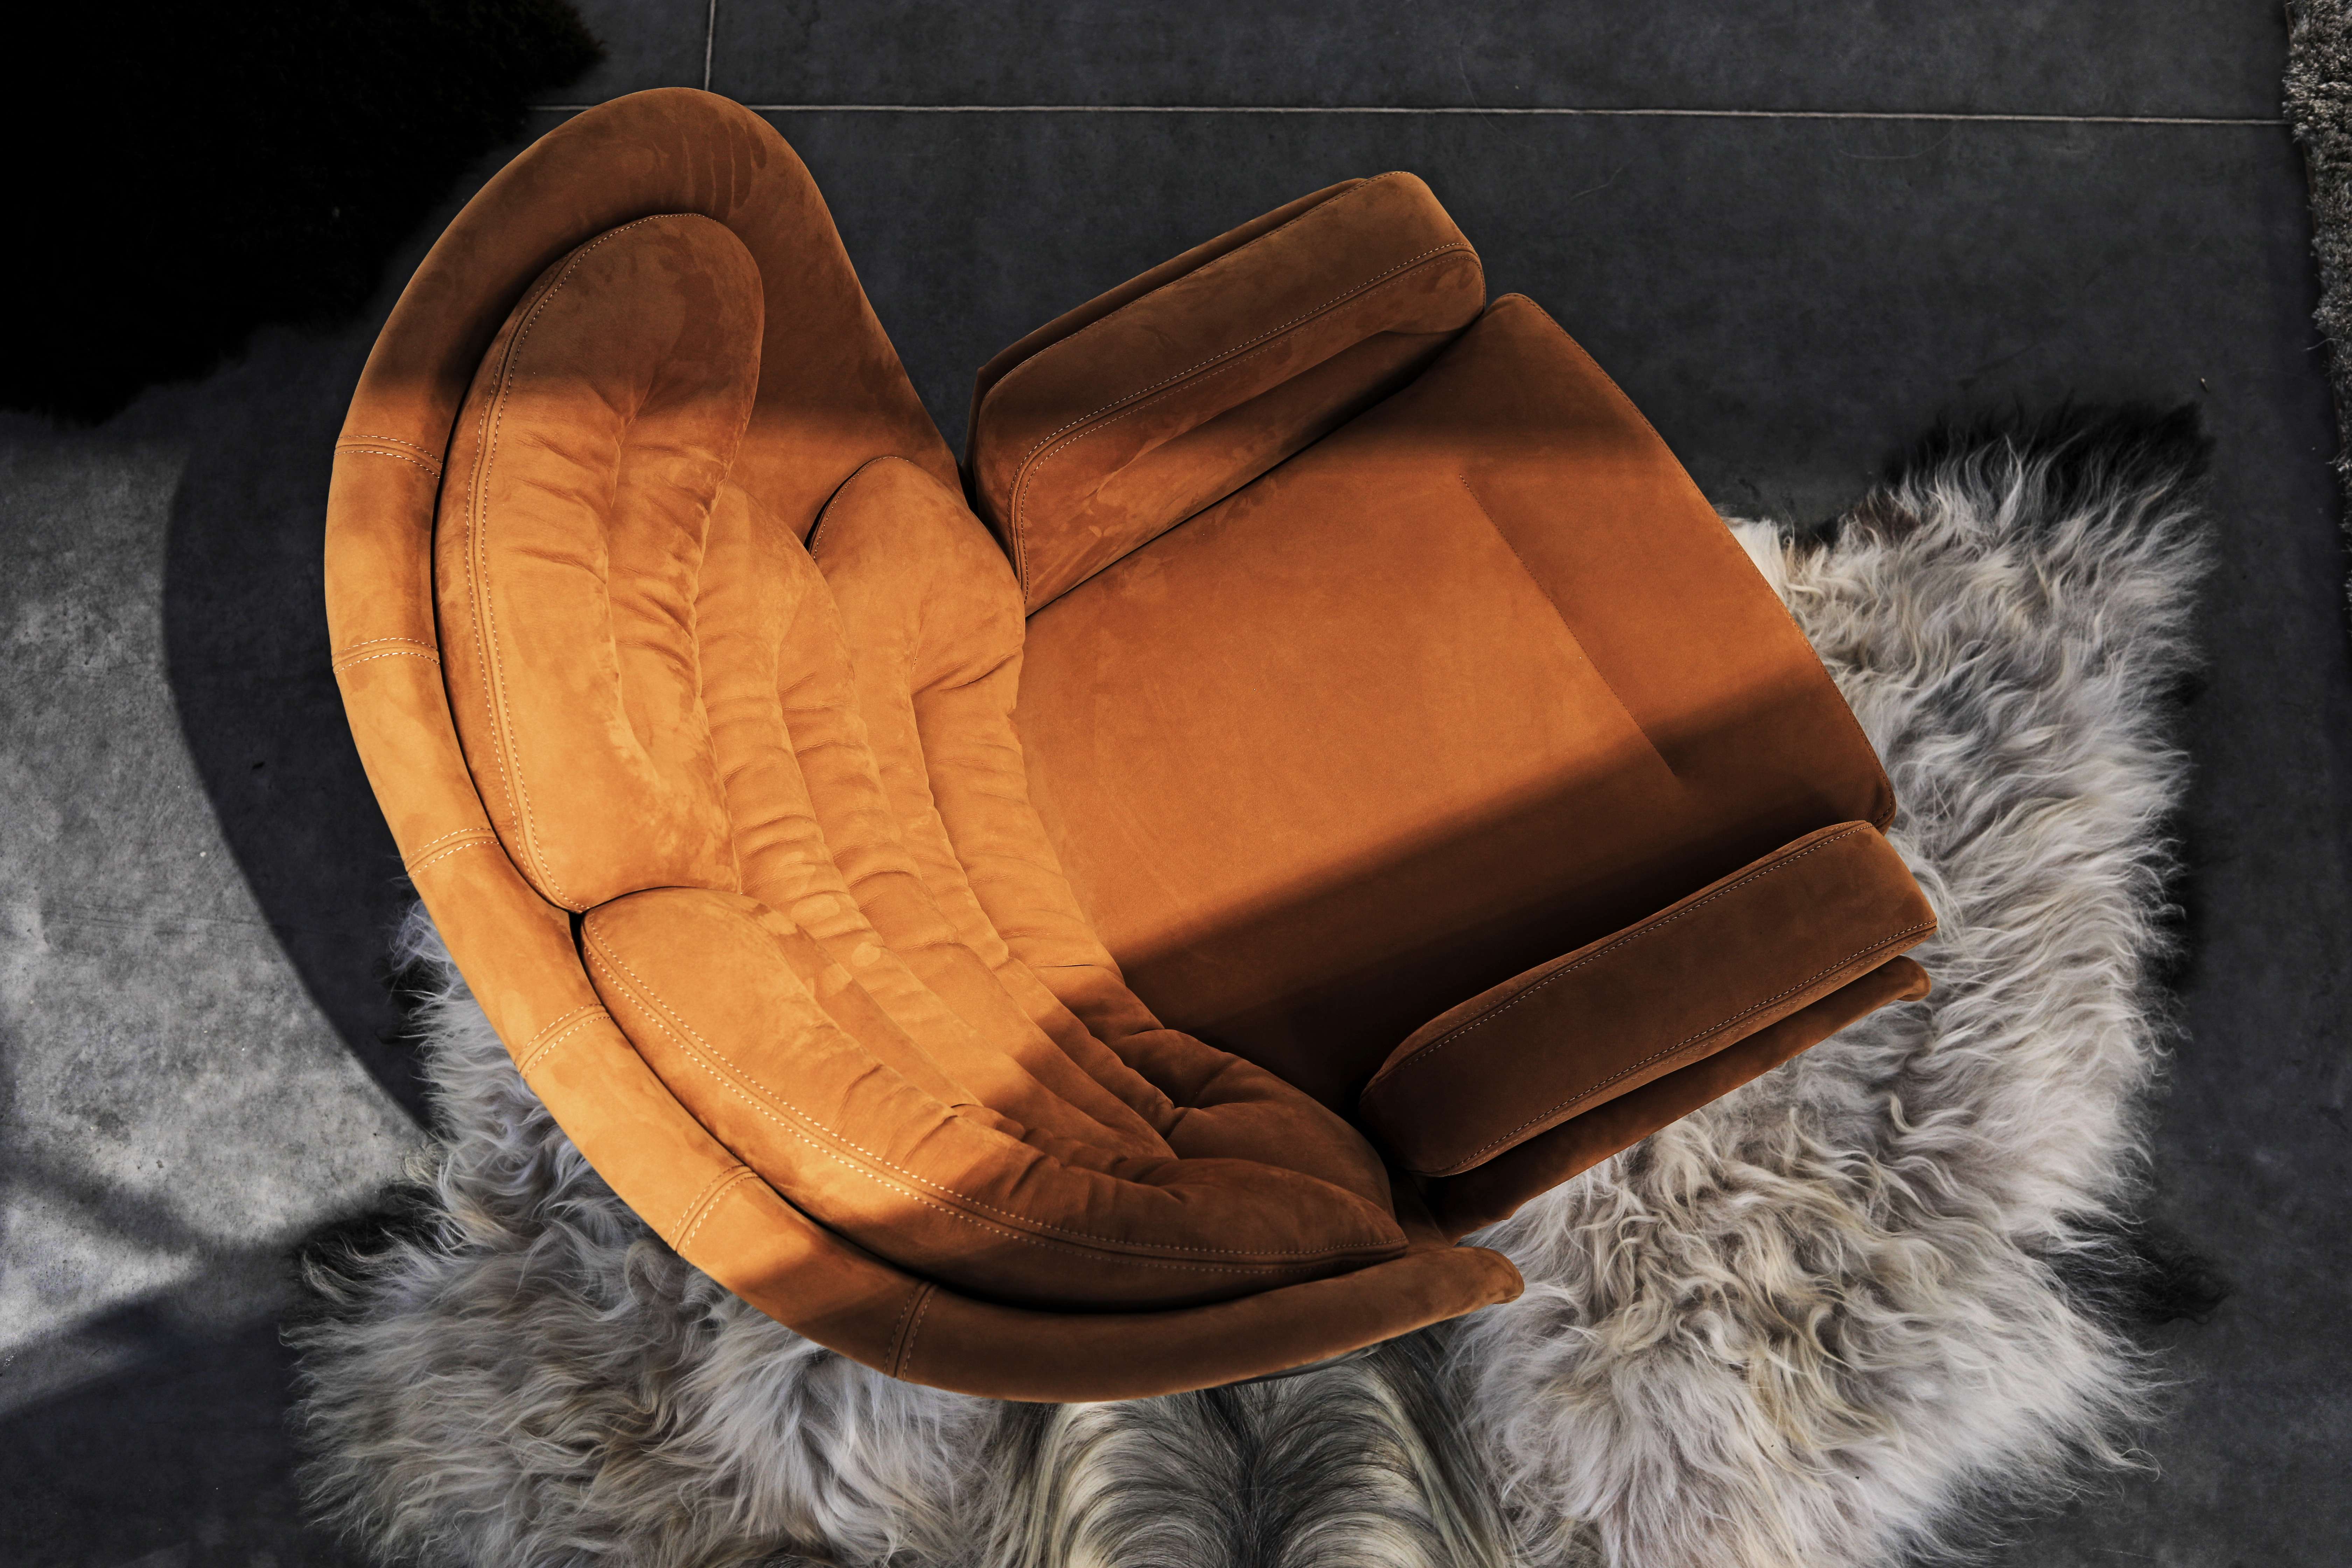 Elda Chair designed by Joe Colombo for Longhi